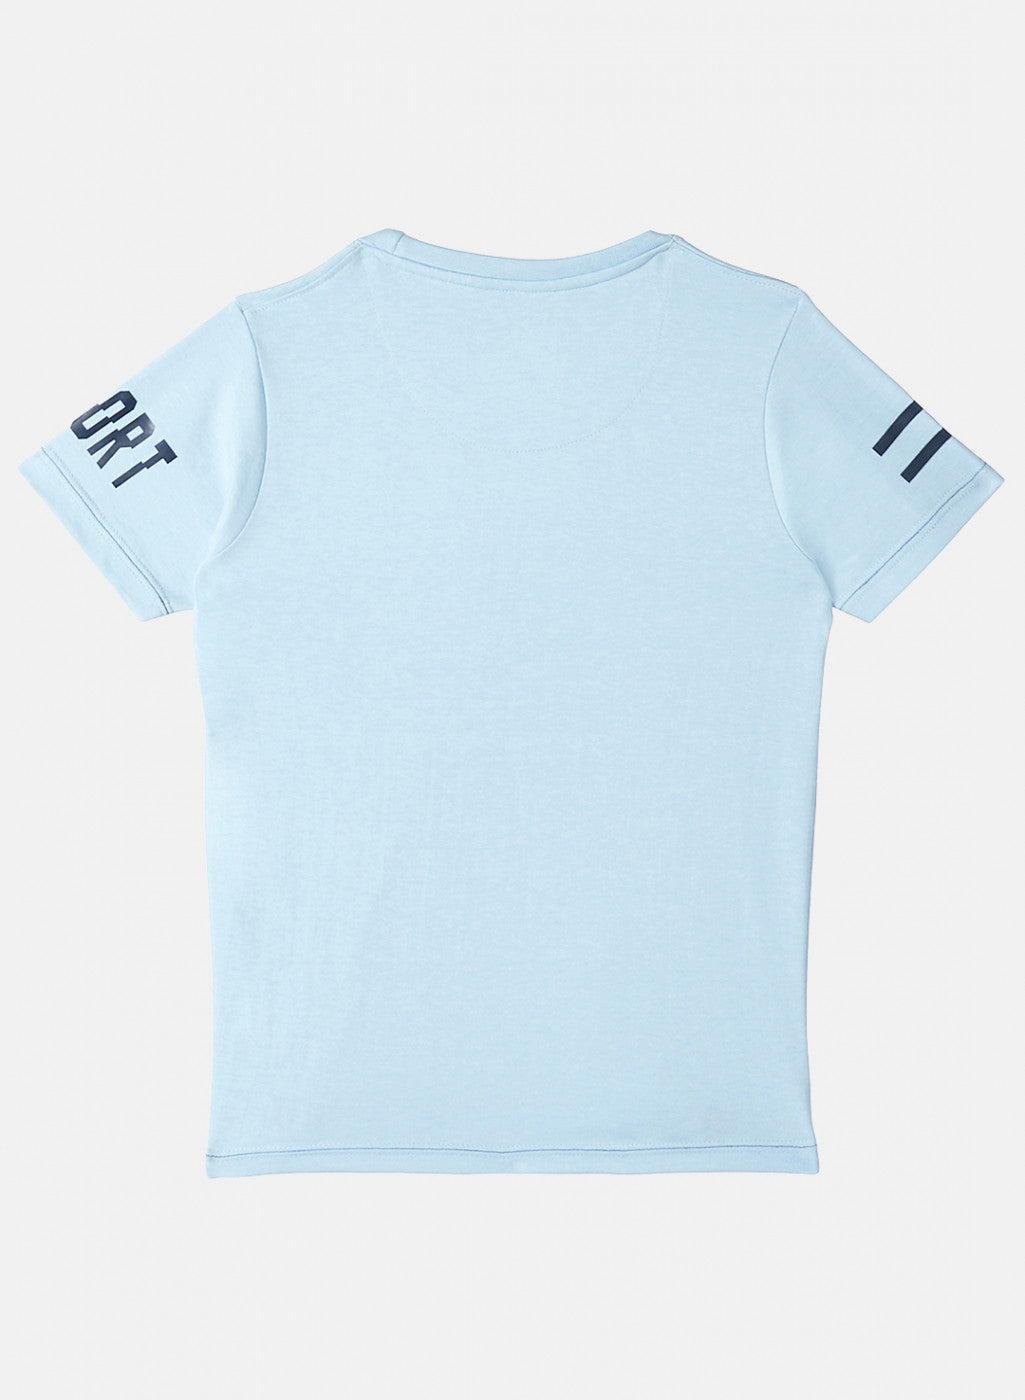 Boys Sky Blue Printed T-Shirt